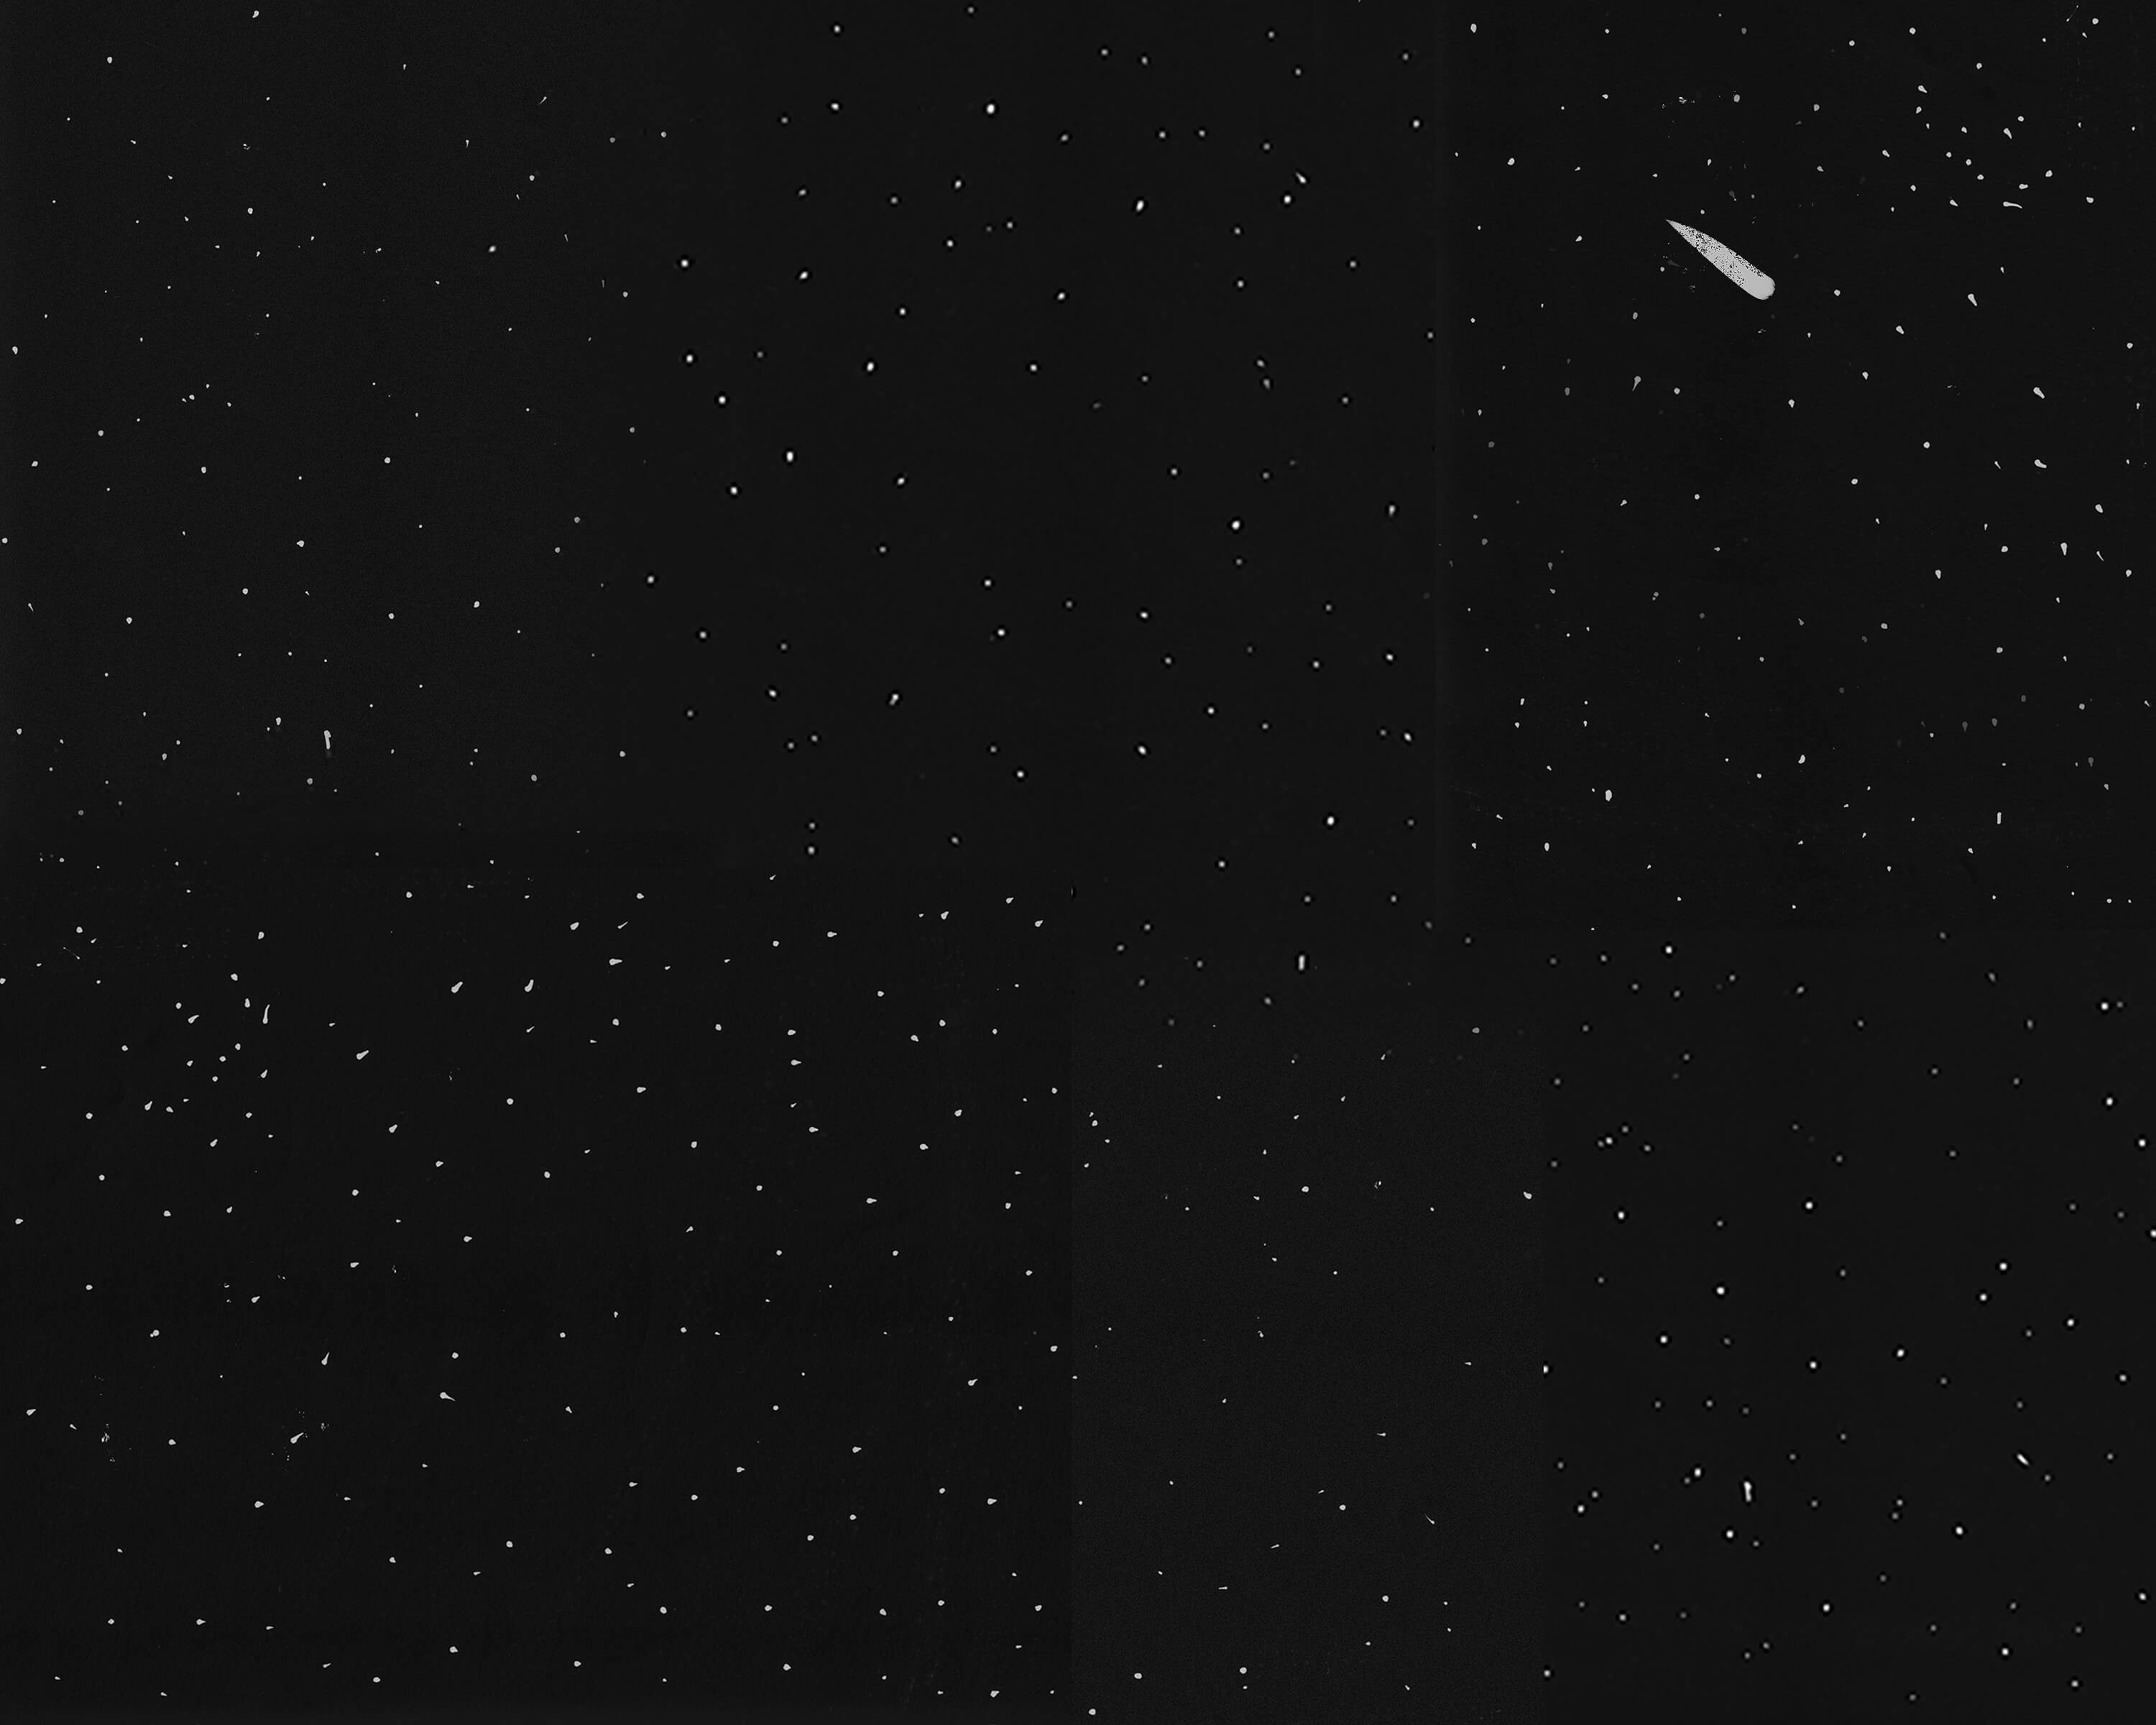 go-slow-to-go-fast-photo-night-sky-asteroid-01.jpg